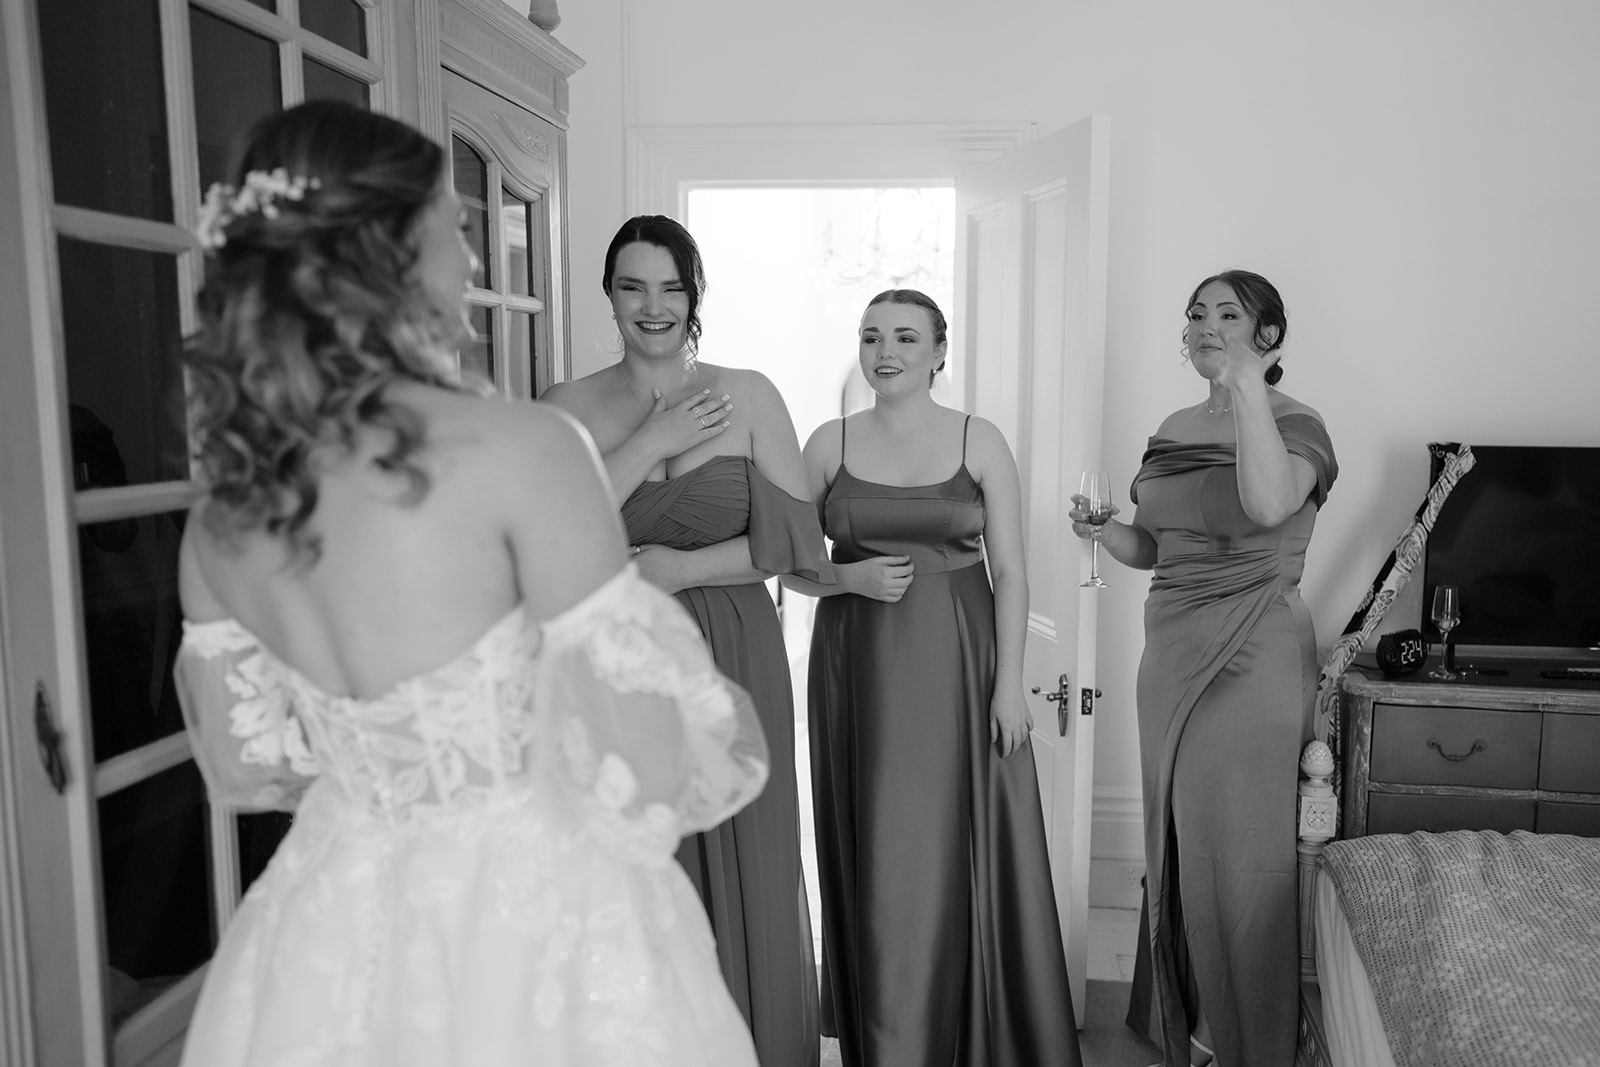 Bride revealing stunning wedding dress to excited bridesmaids